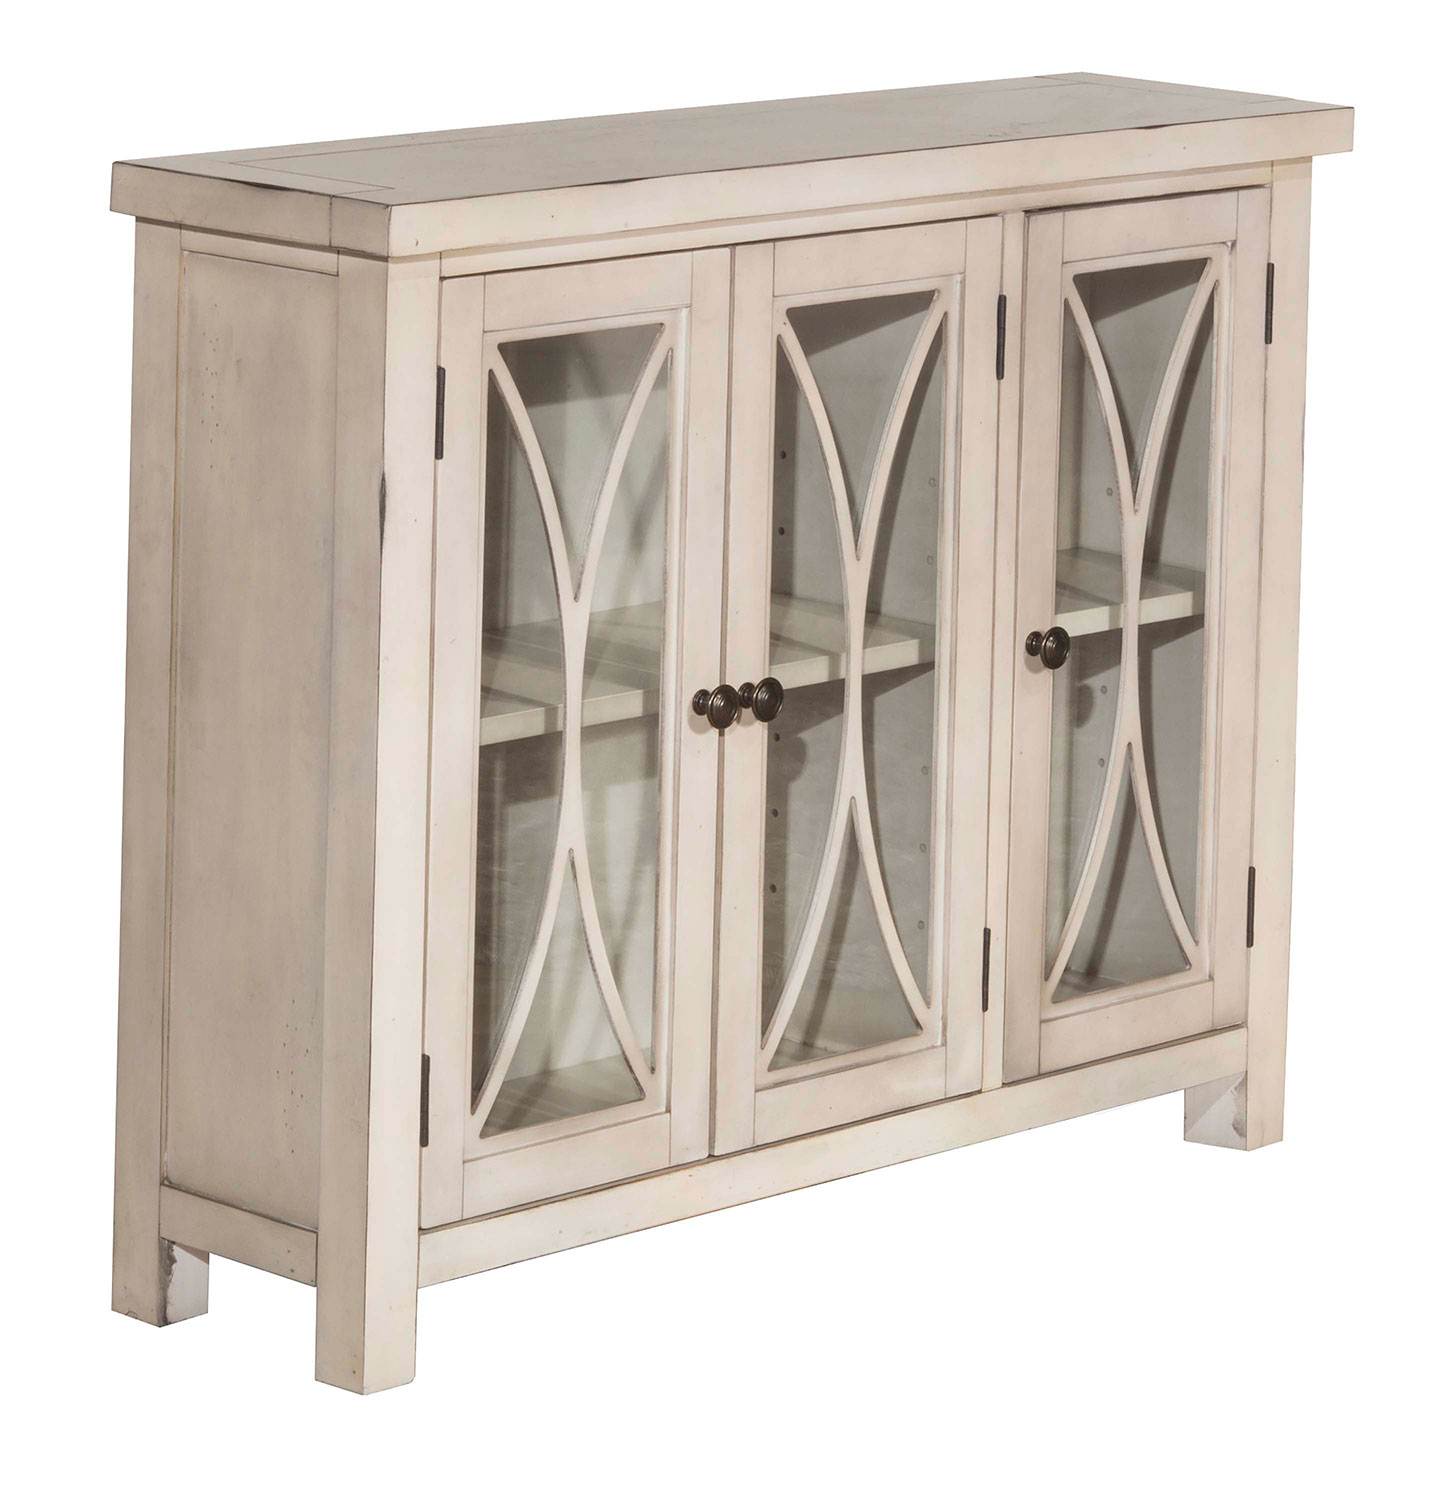 Hillsdale Bayside 3-Door Cabinet - Antique White